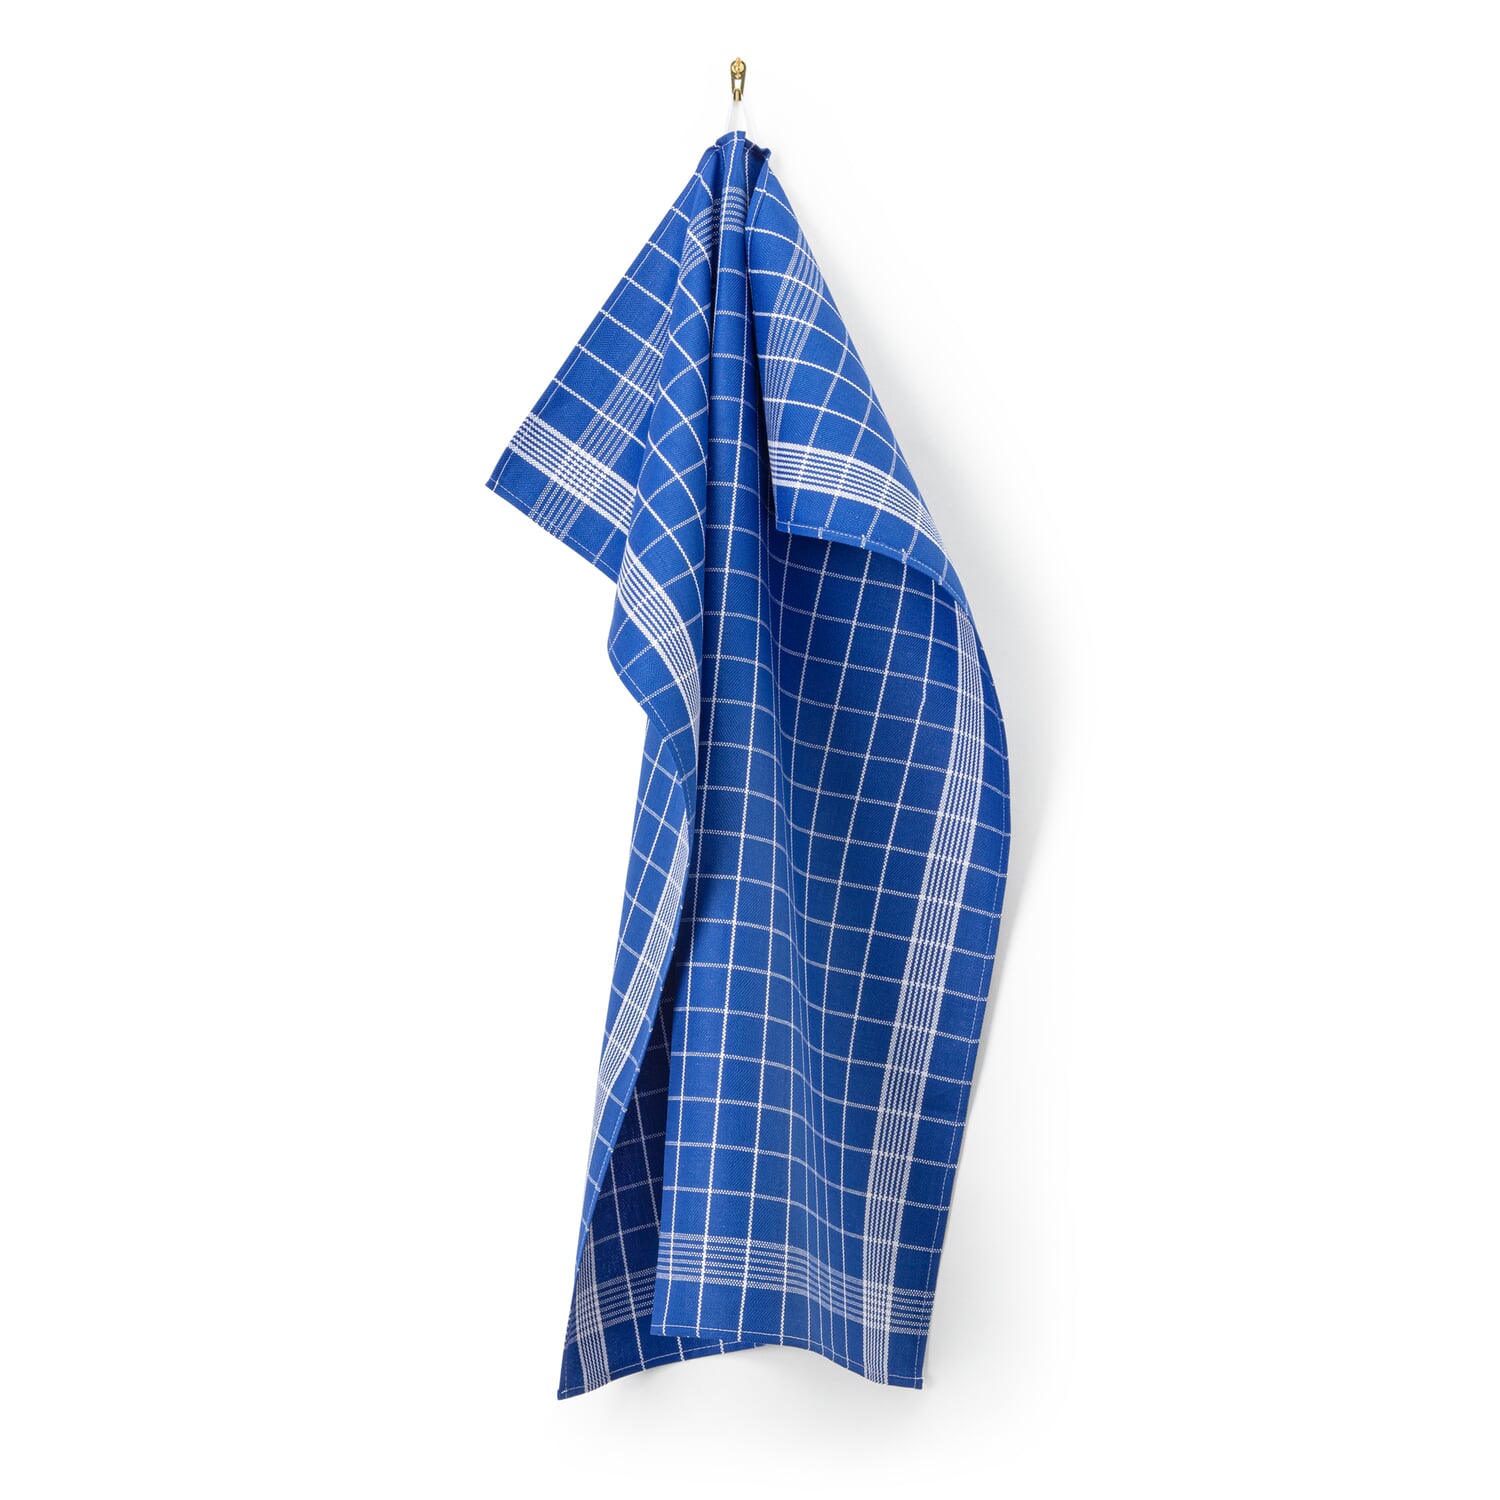 Dry pearl tea towel twisted half linen, Blue-white